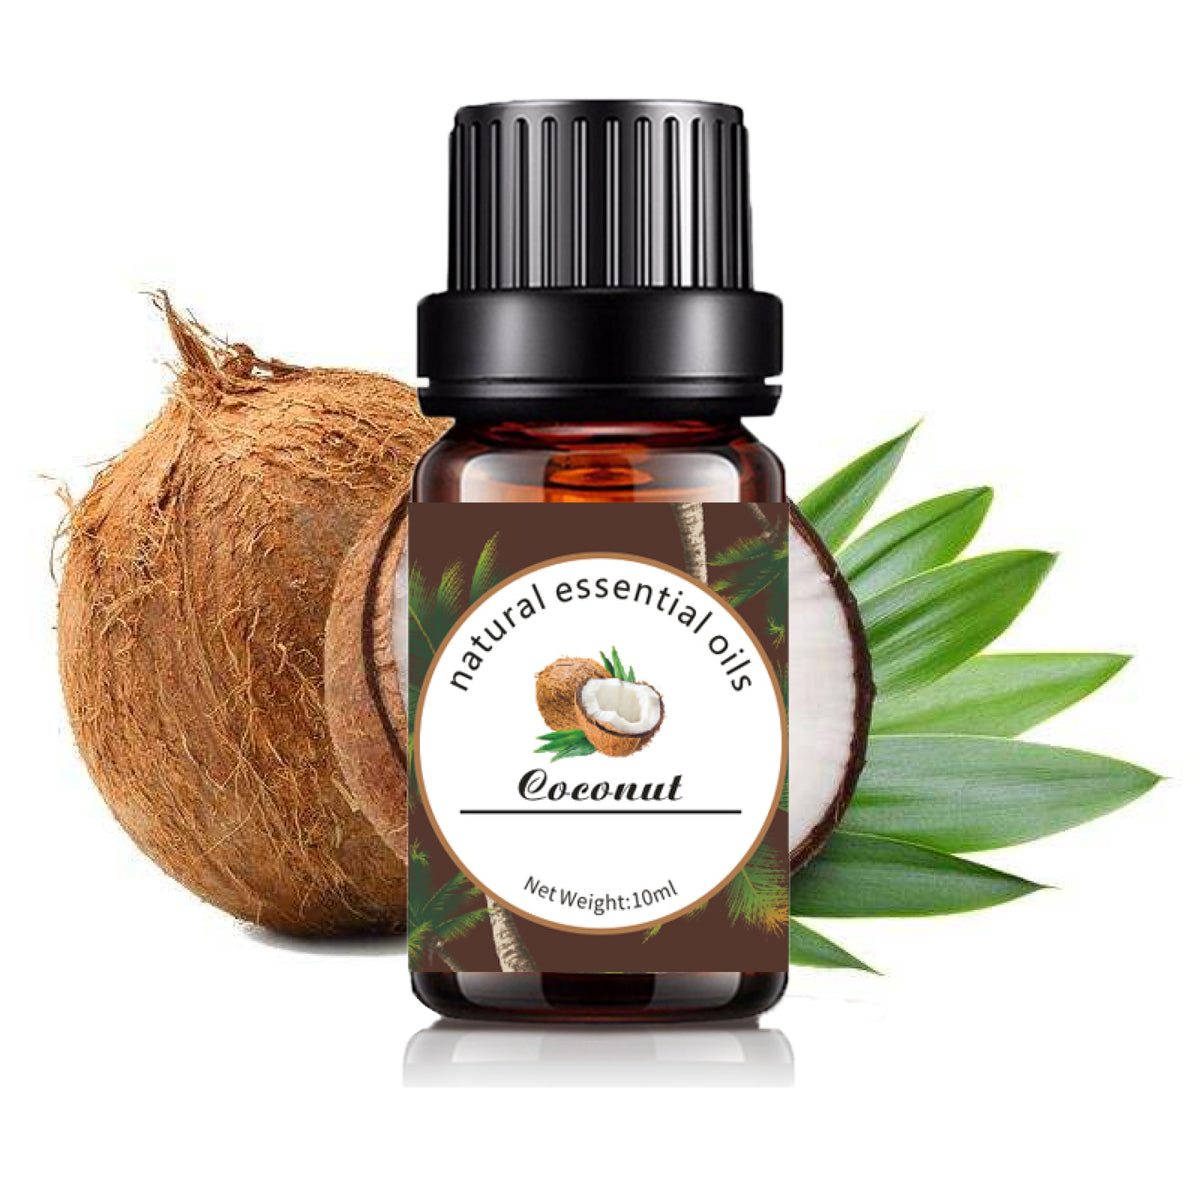 Coconut - 10ml pure natural essential oil